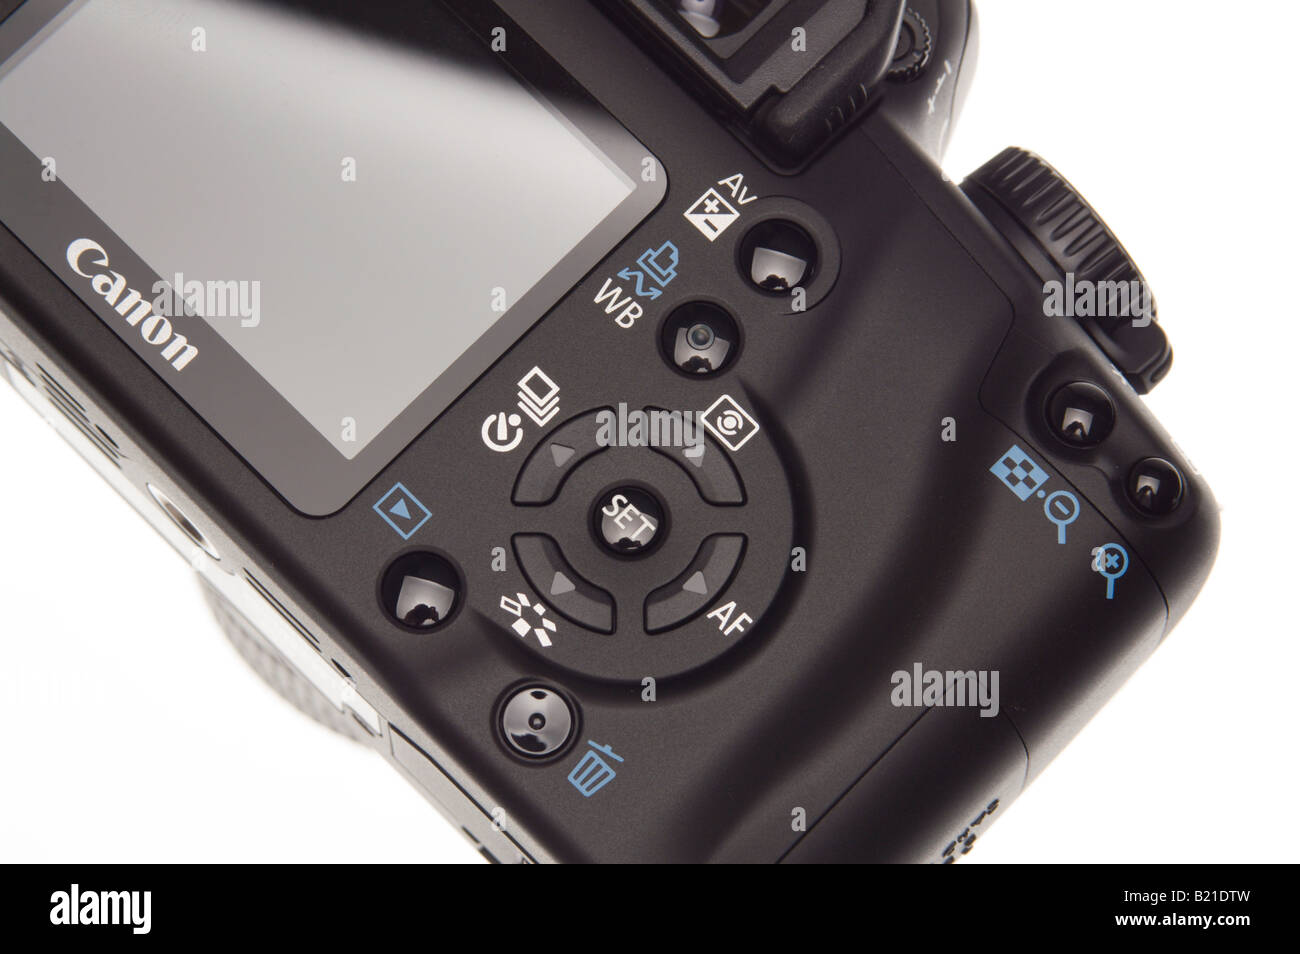 Canon EOS 1000D digital SLR camera July 2008 launch product shot rear  joypad controller Stock Photo - Alamy